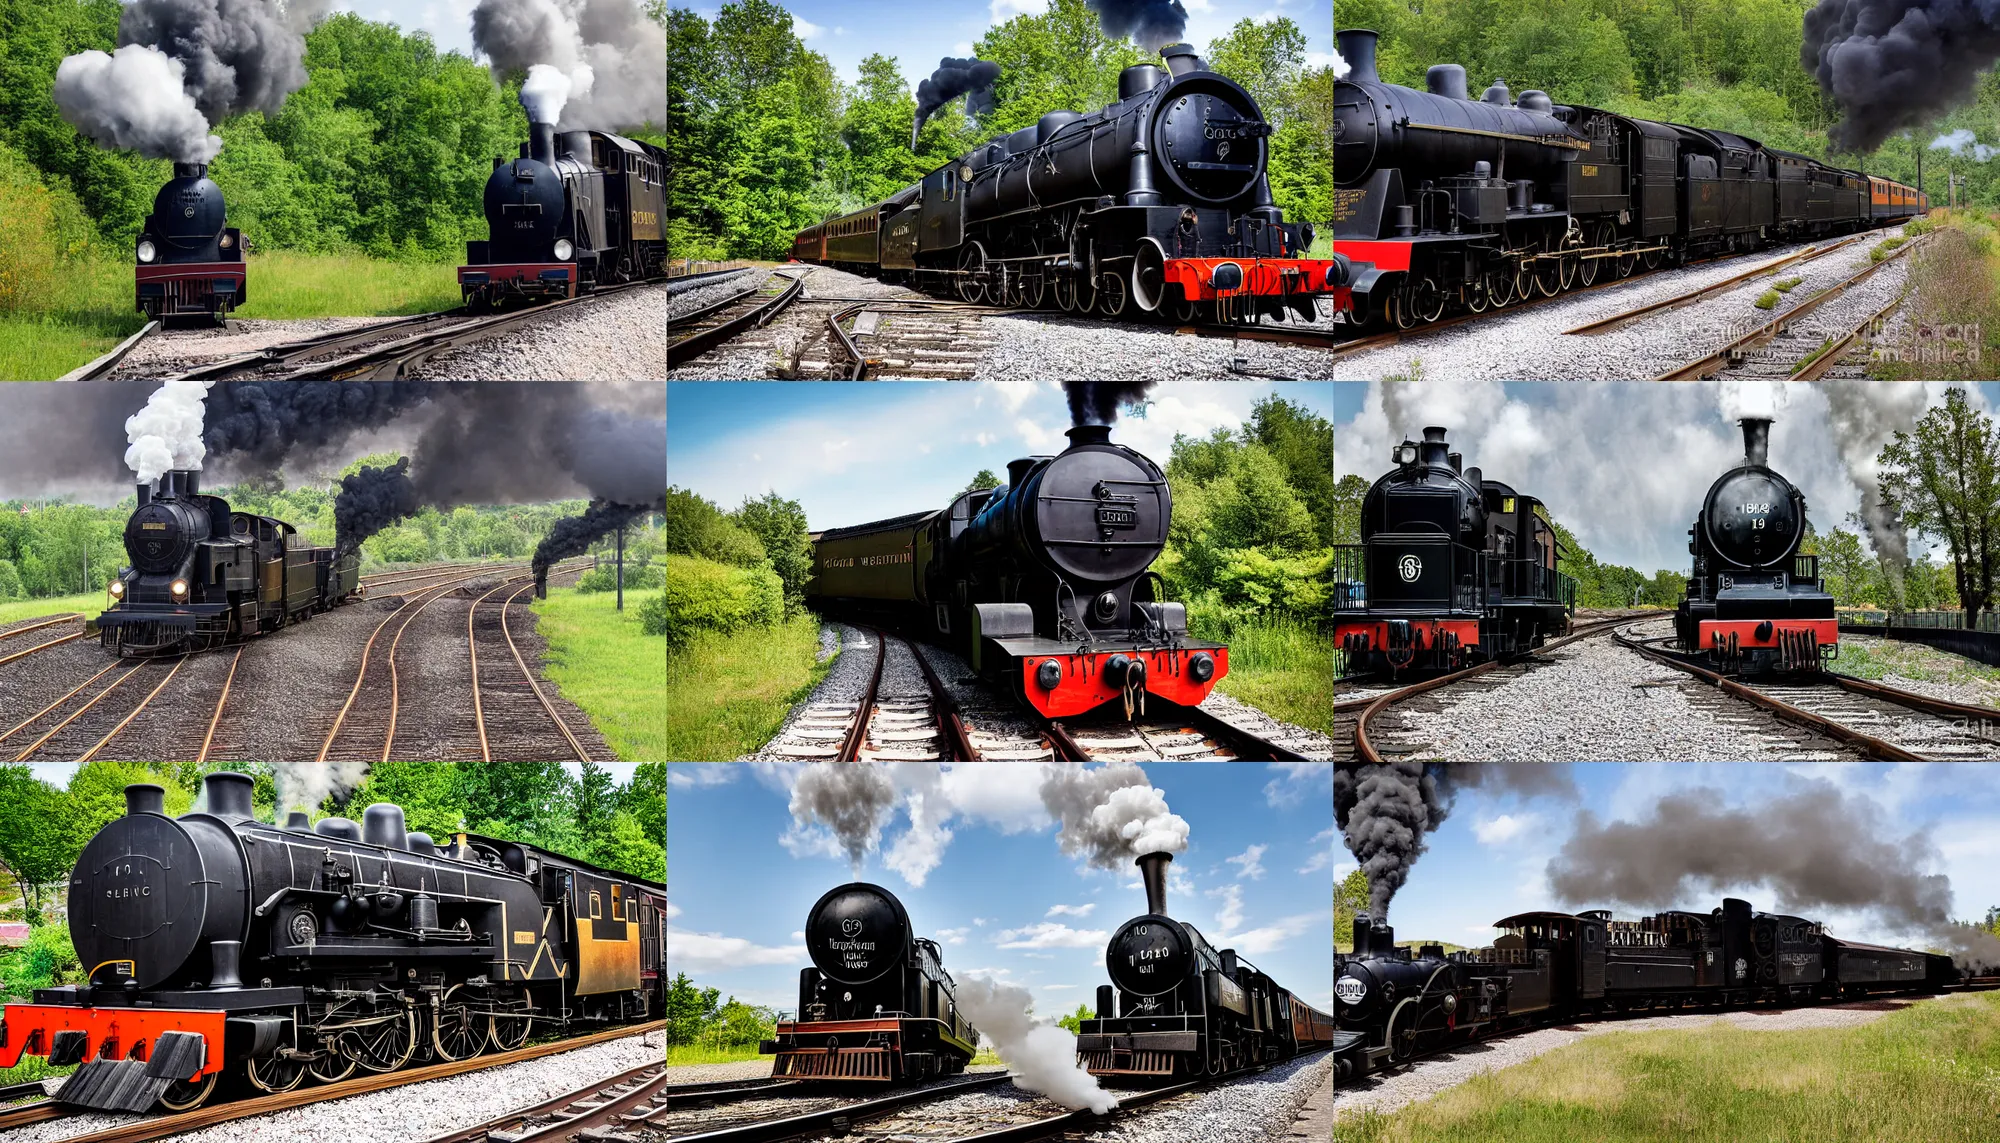 Prompt: restored black steam locomotive travelling on train tracks, photograph